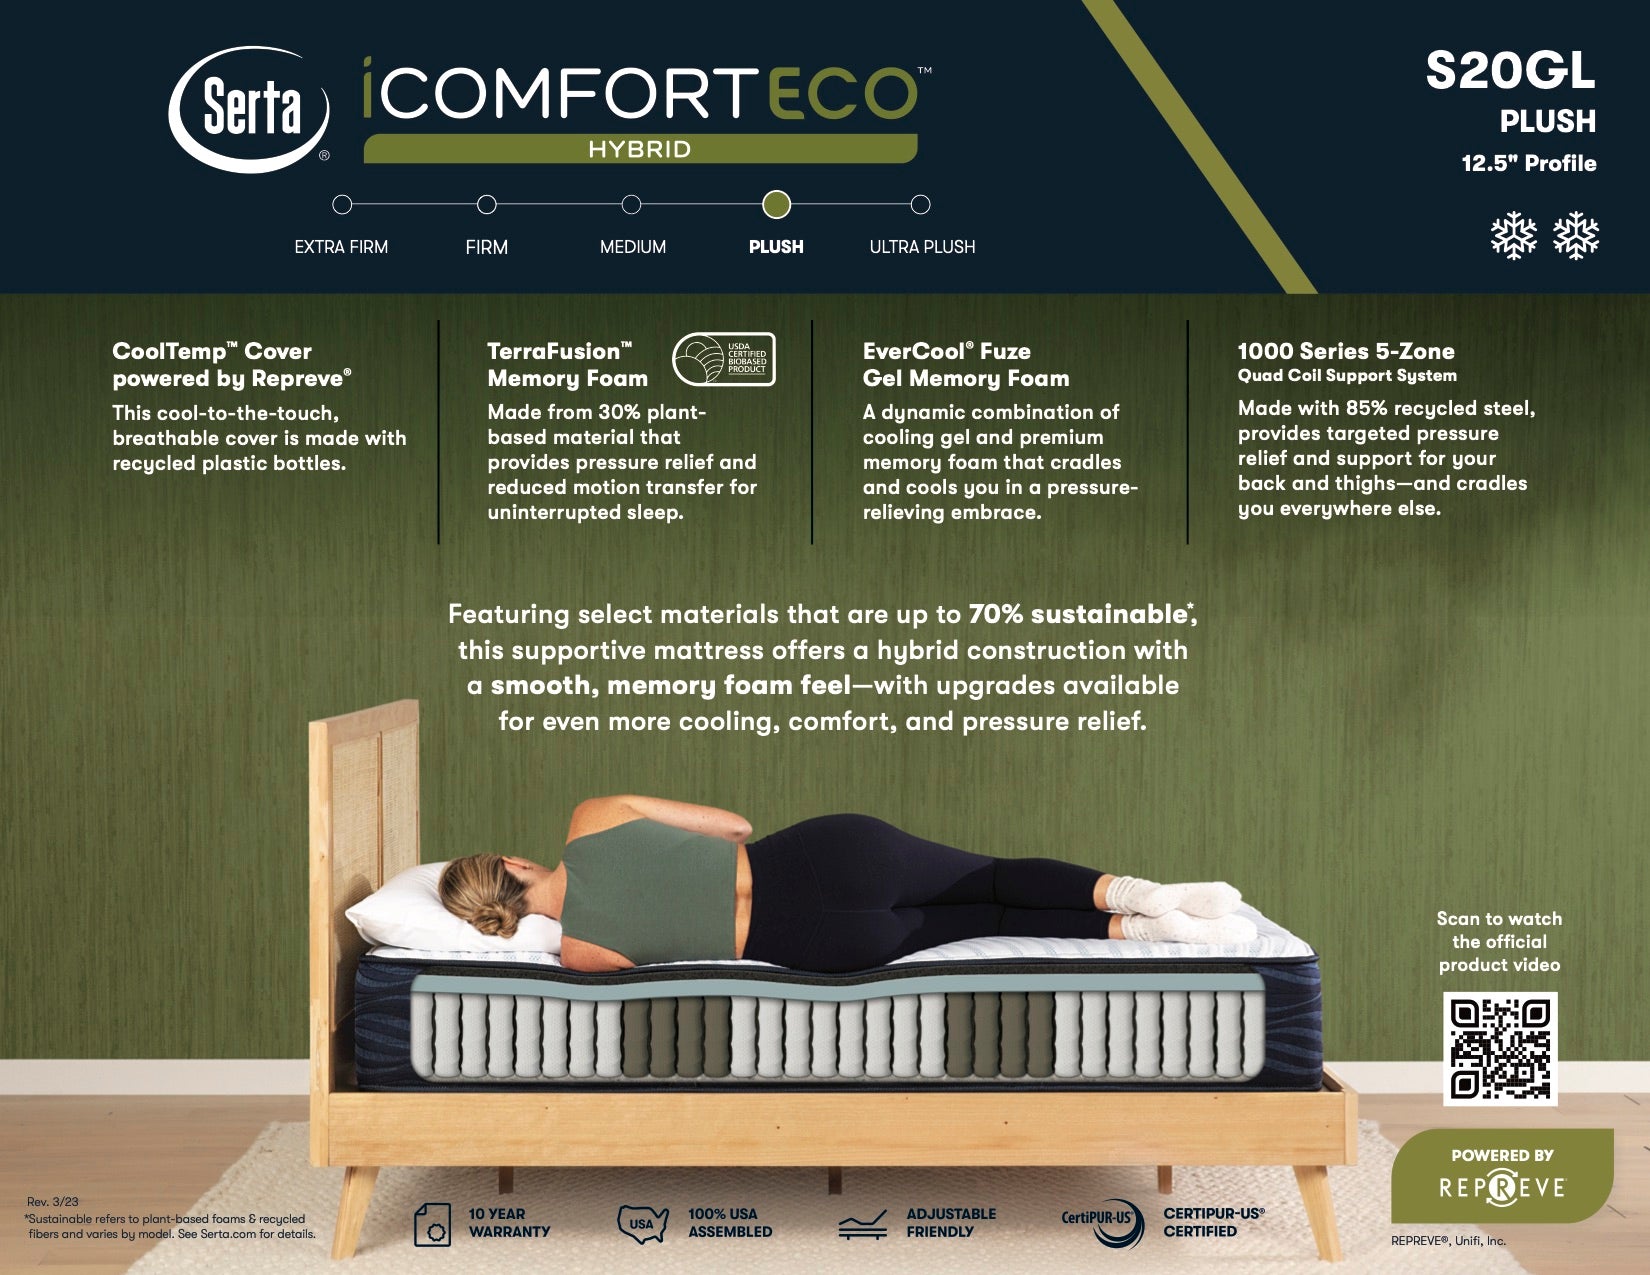 iComfort Eco Hybrid Plush 12.5 inch profile mattress spec sheet